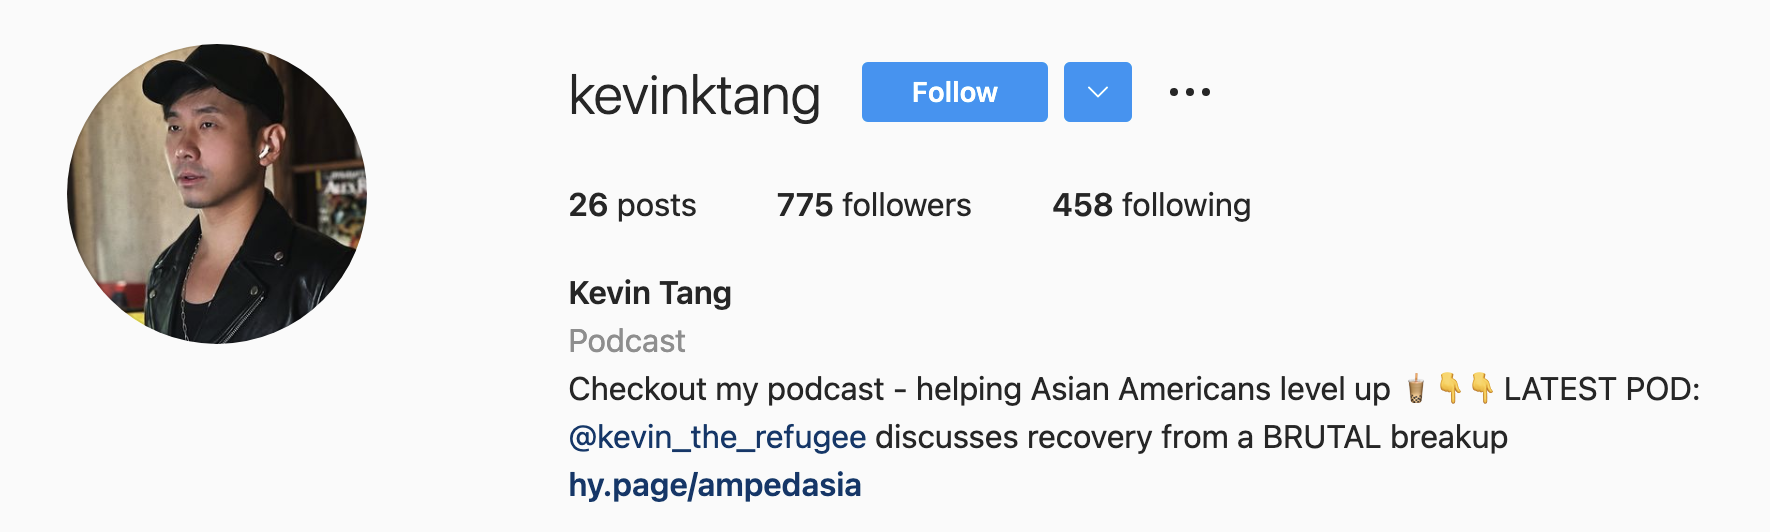 Kevin Tang Link in Bio